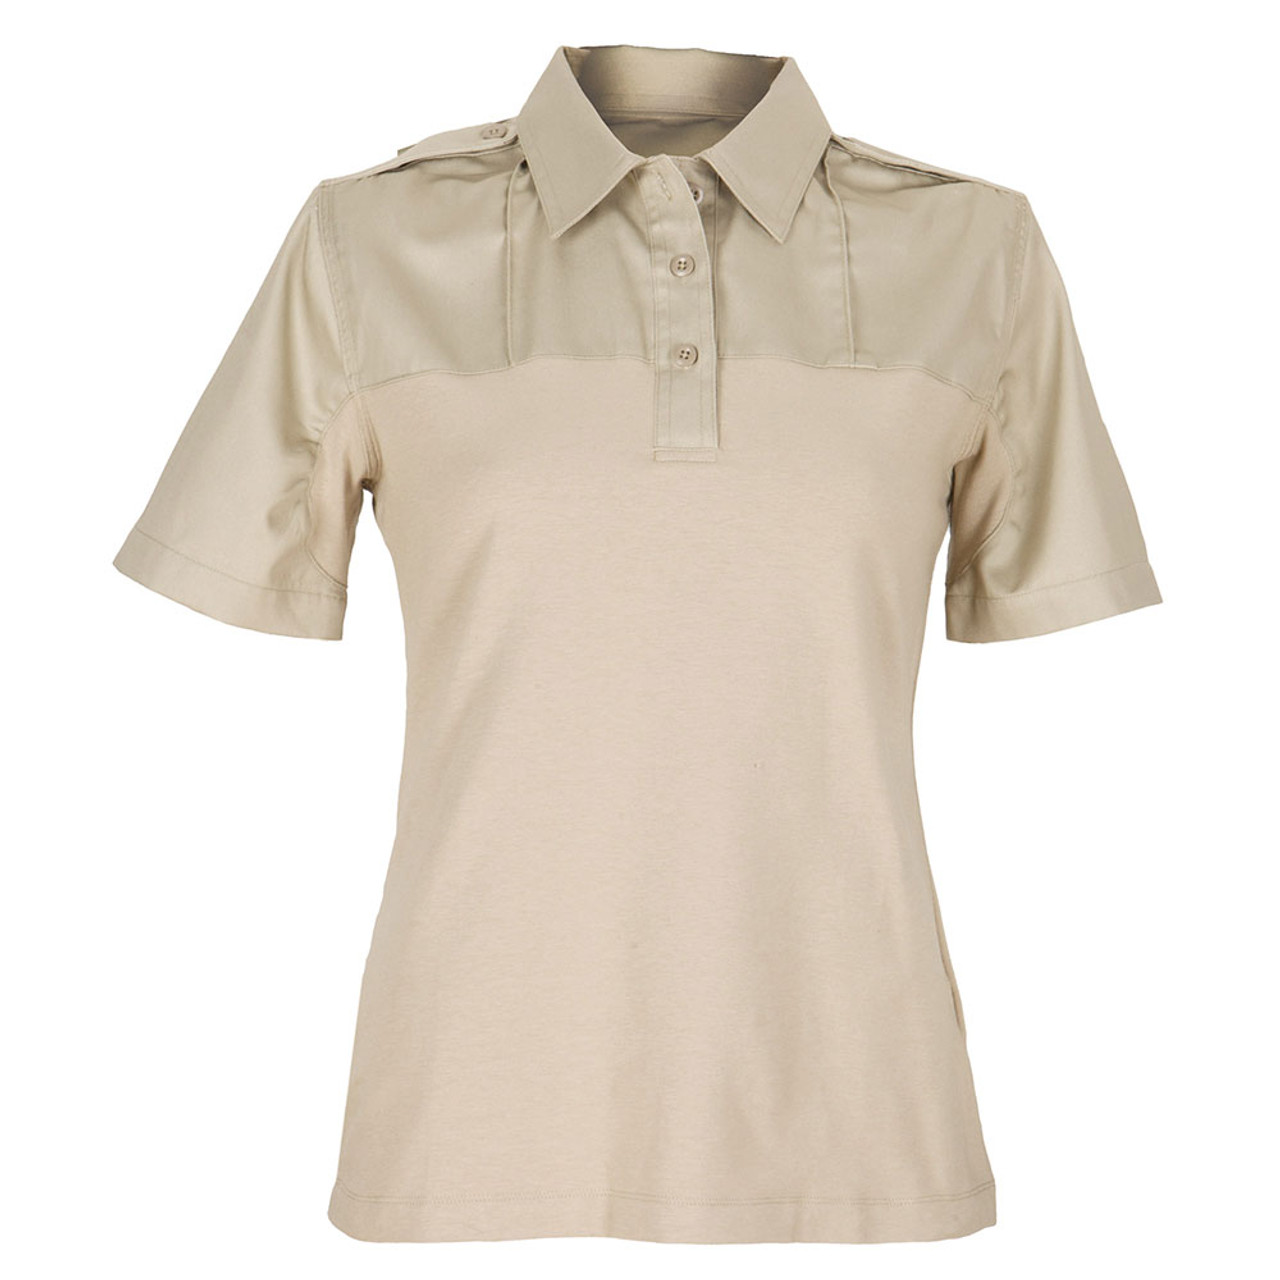 5.11 Tactical Women's Short Sleeve PDU Rapid Shirt - Atlantic Tactical Inc